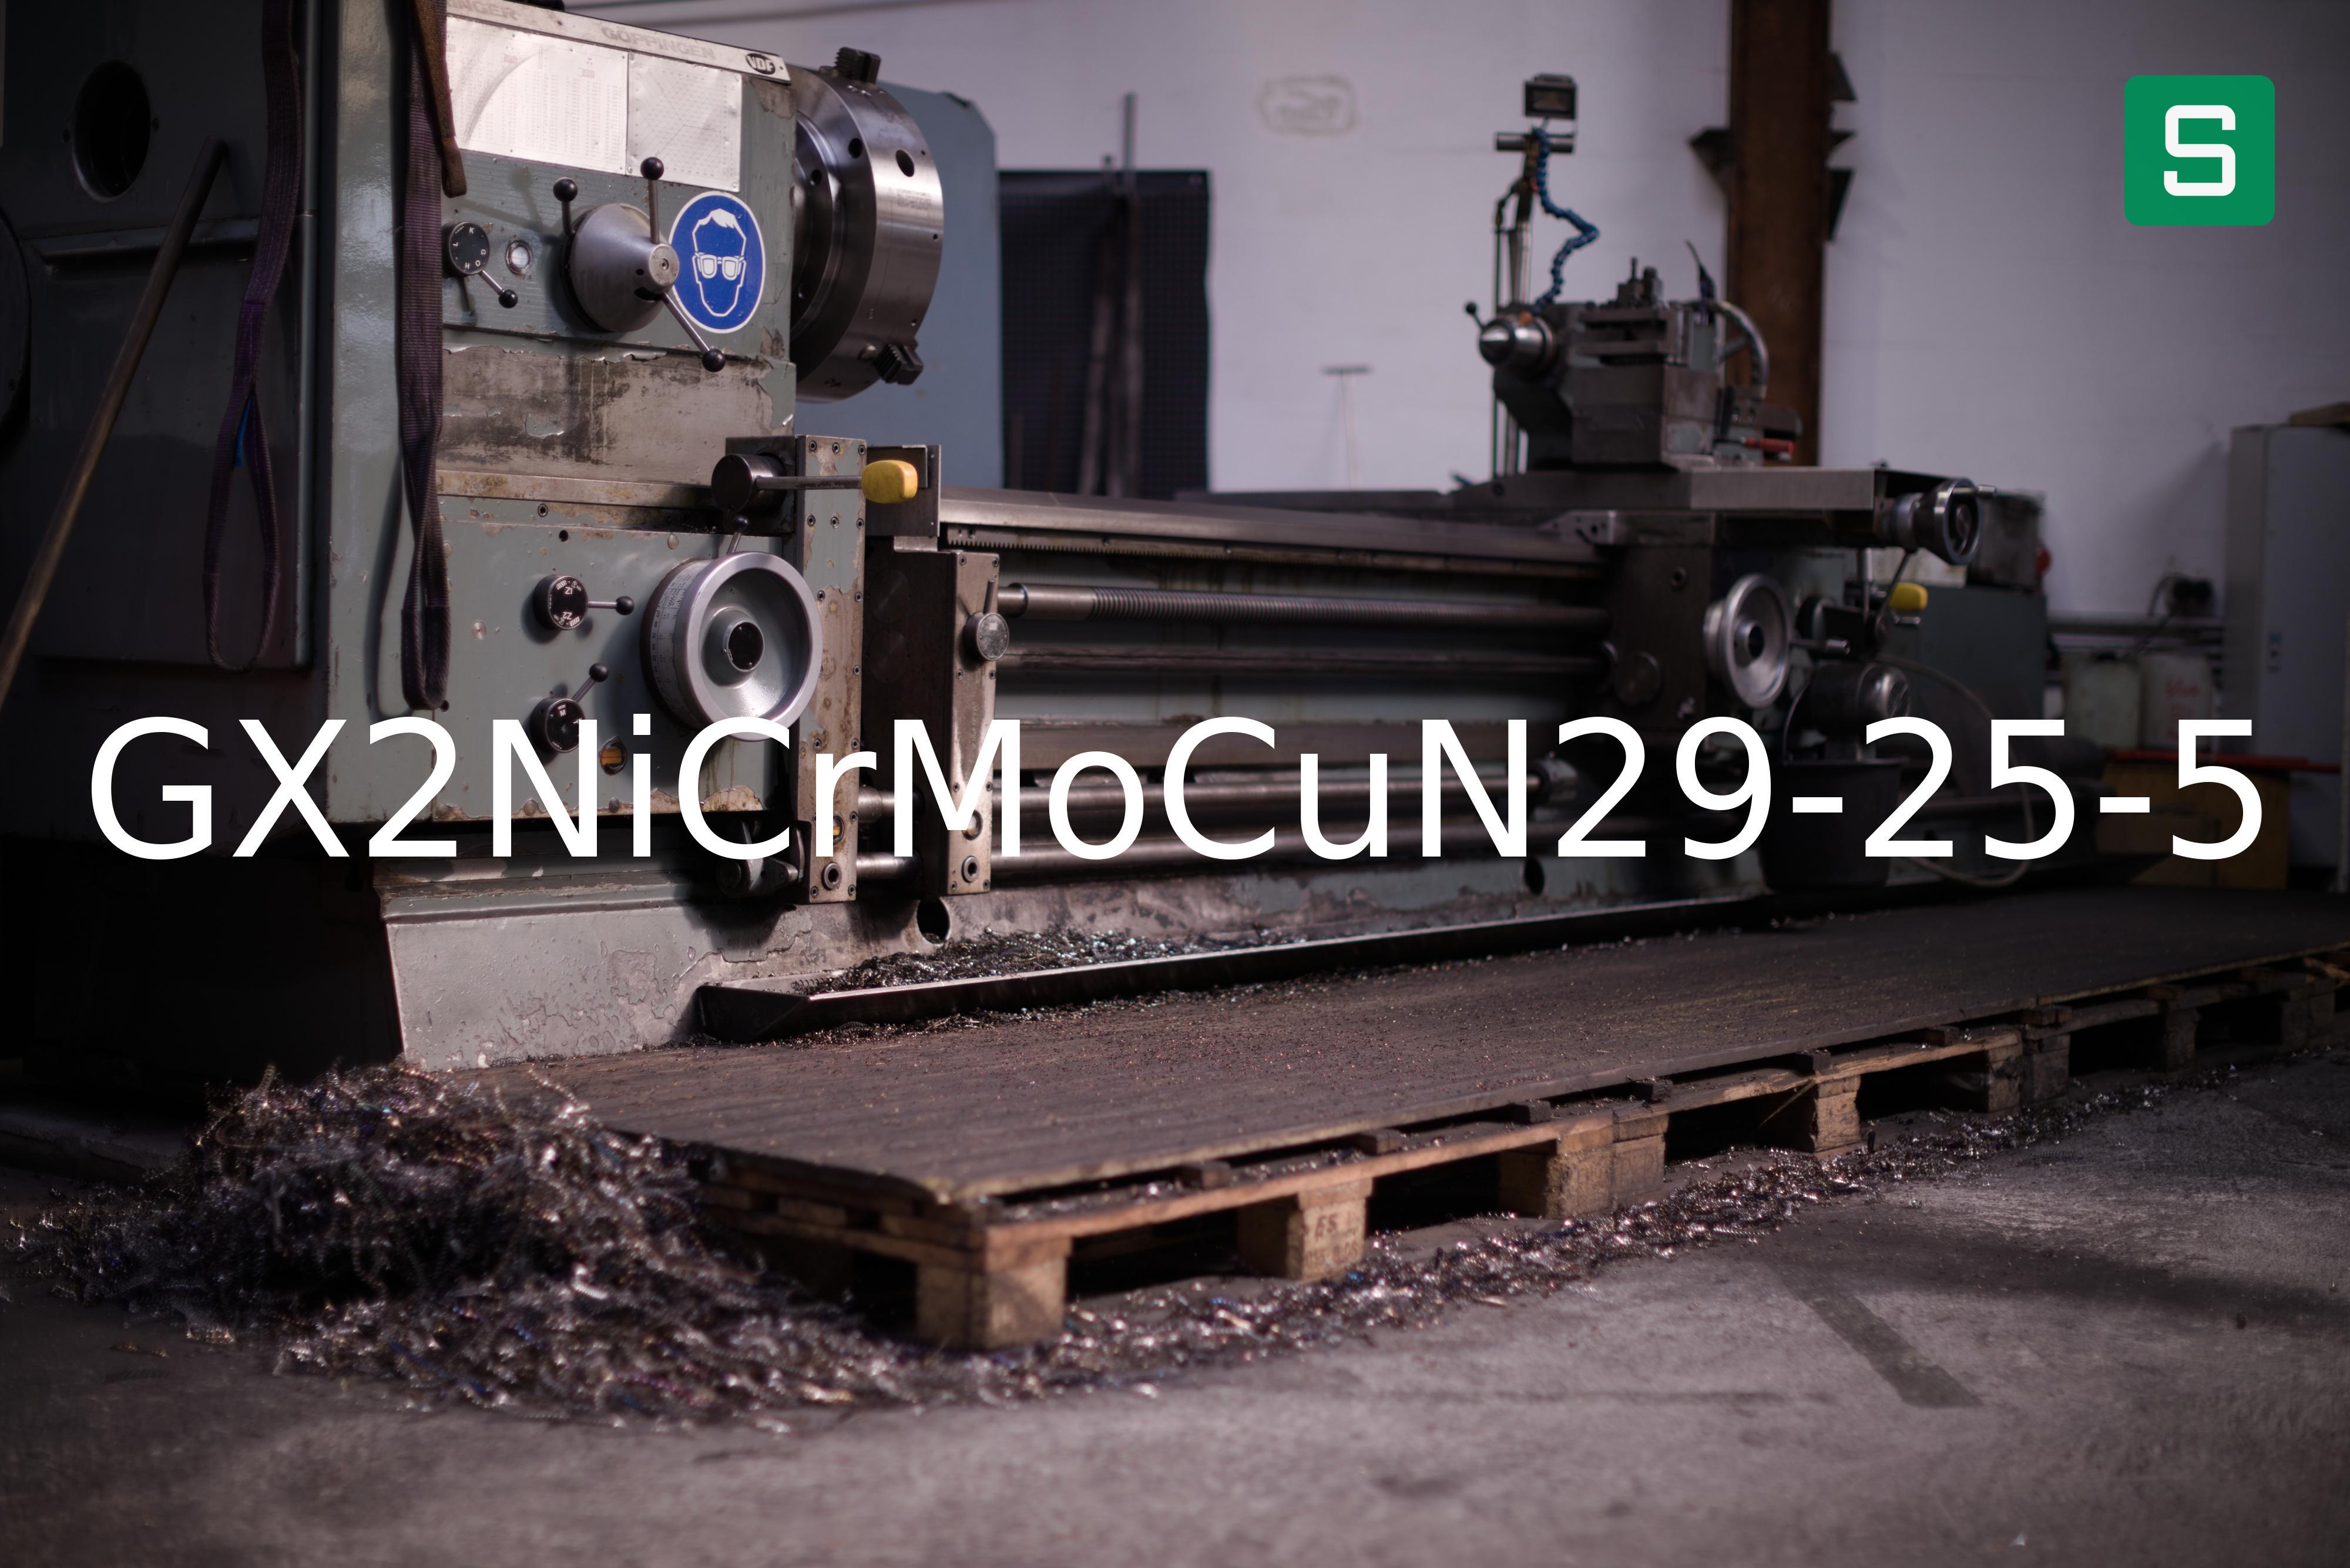 Steel Material: GX2NiCrMoCuN29-25-5